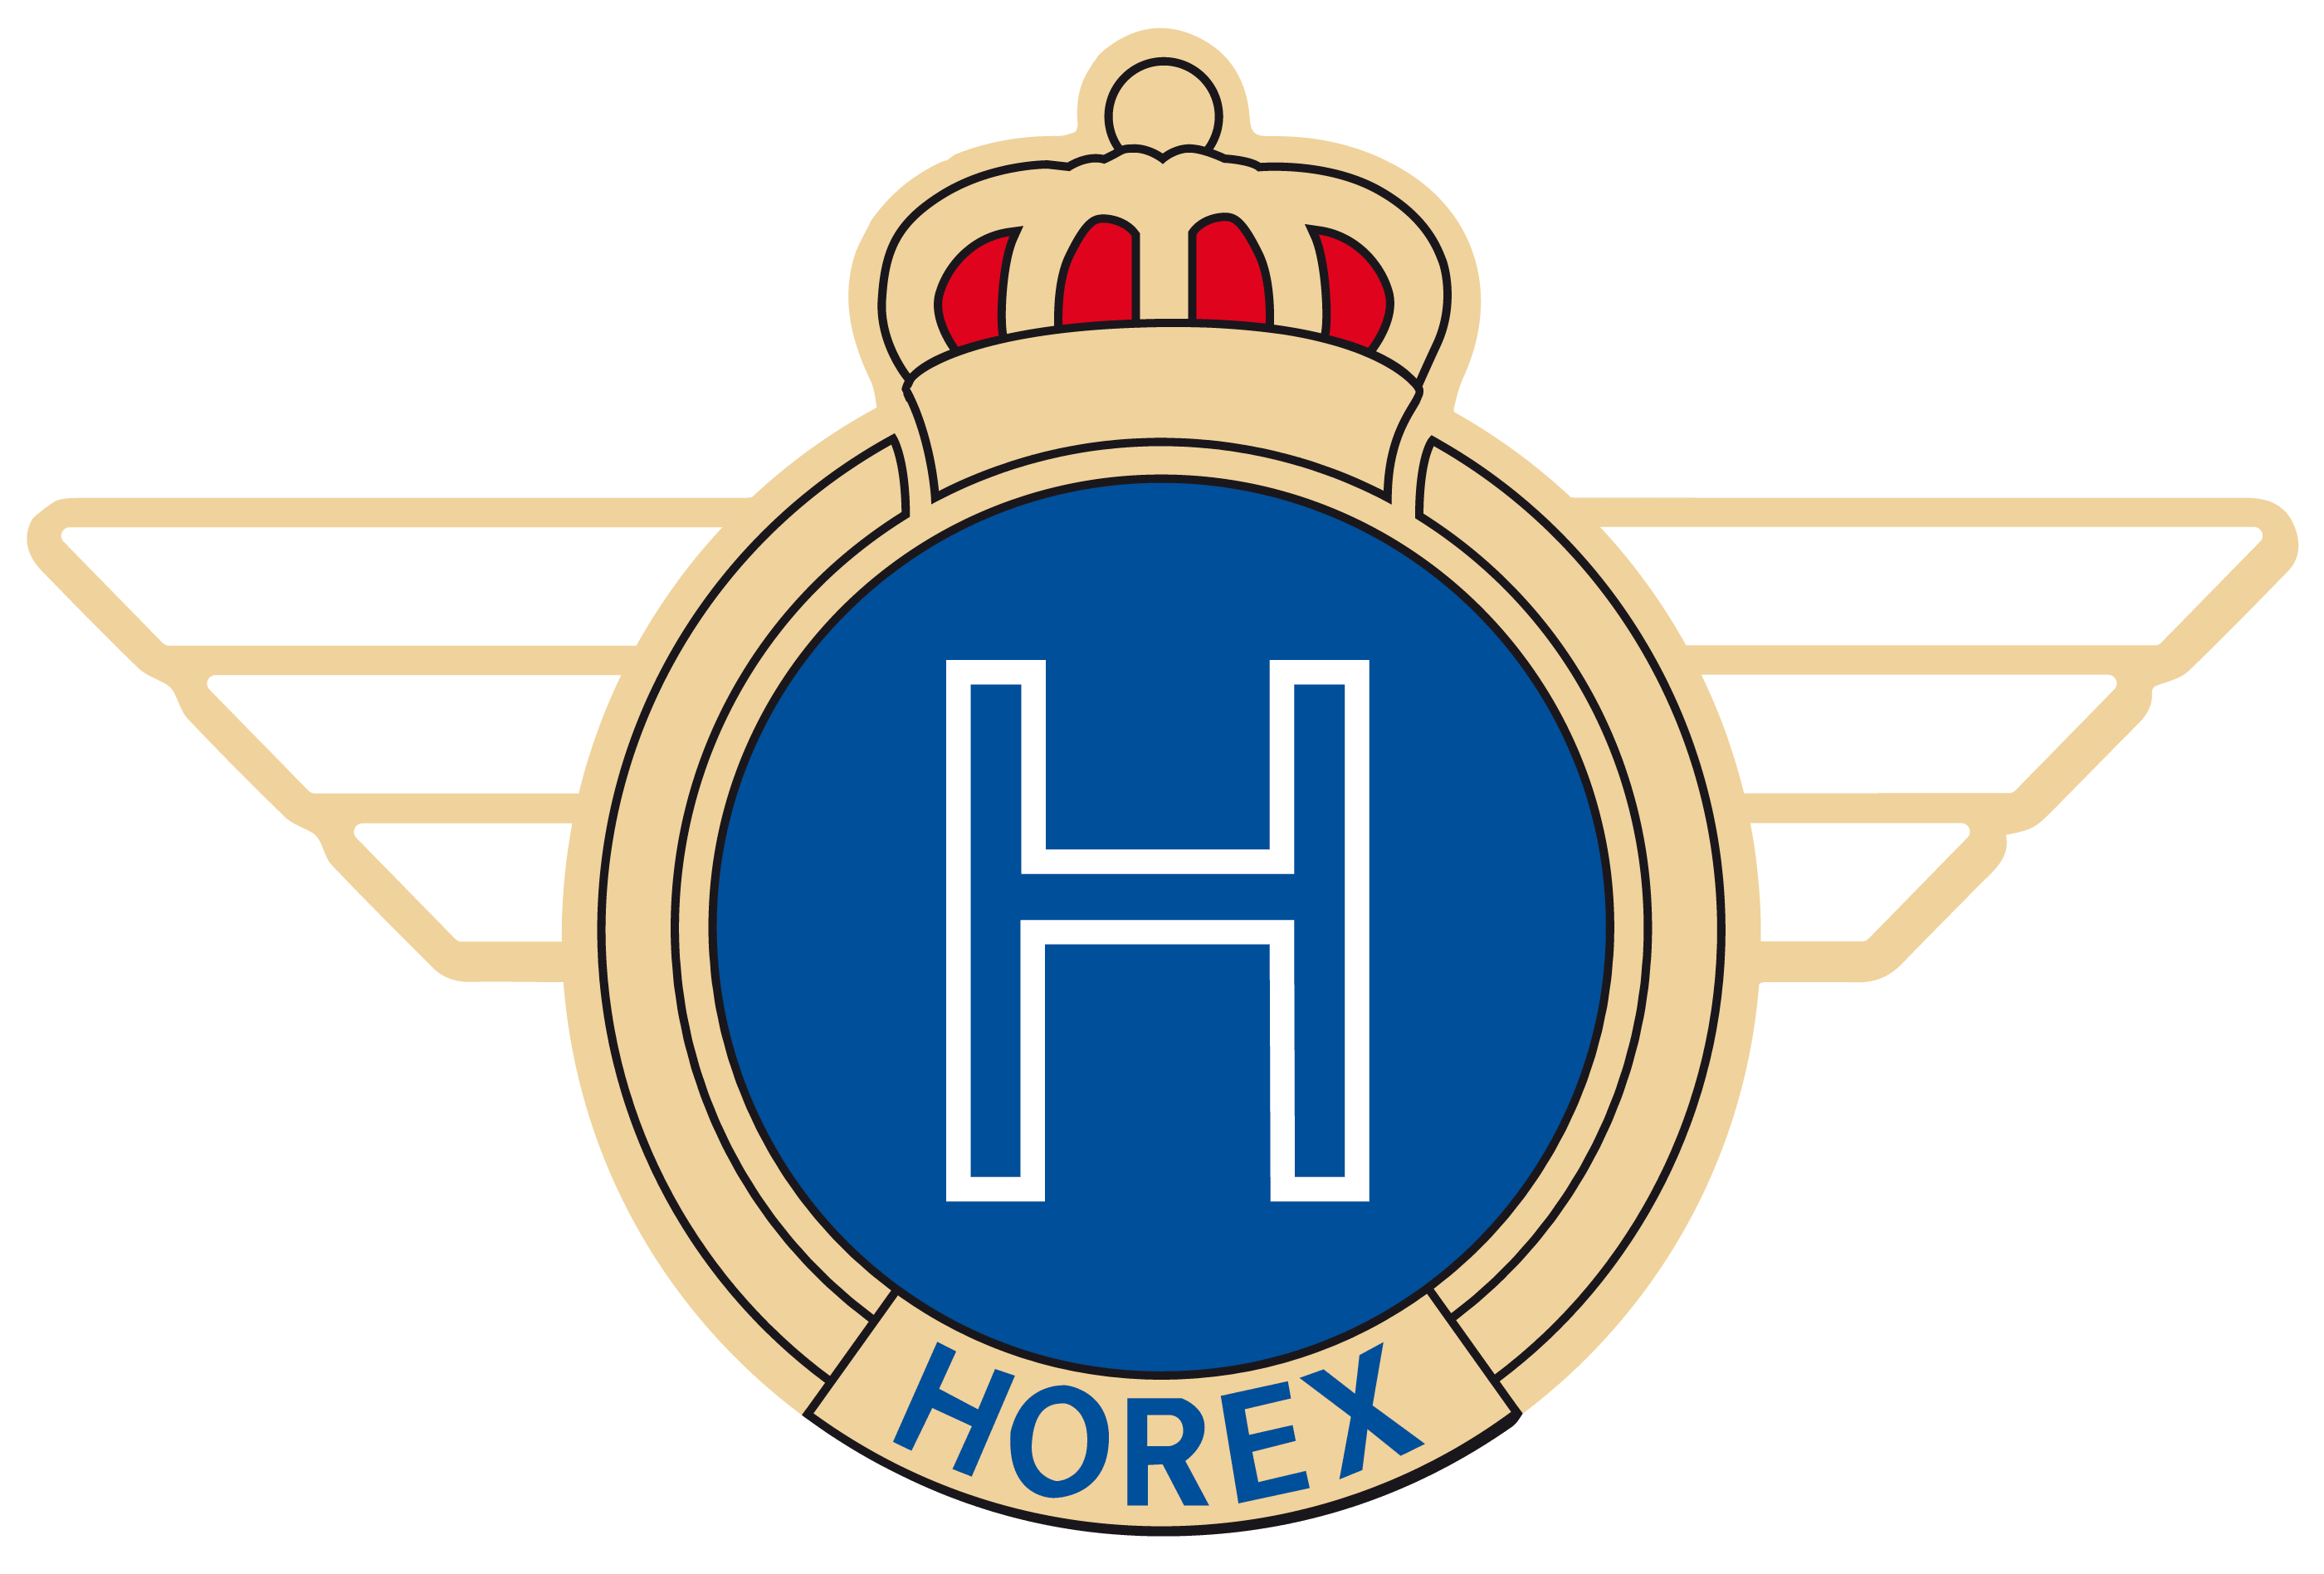 Horex motorcycle  logo  history and Meaning bike  emblem